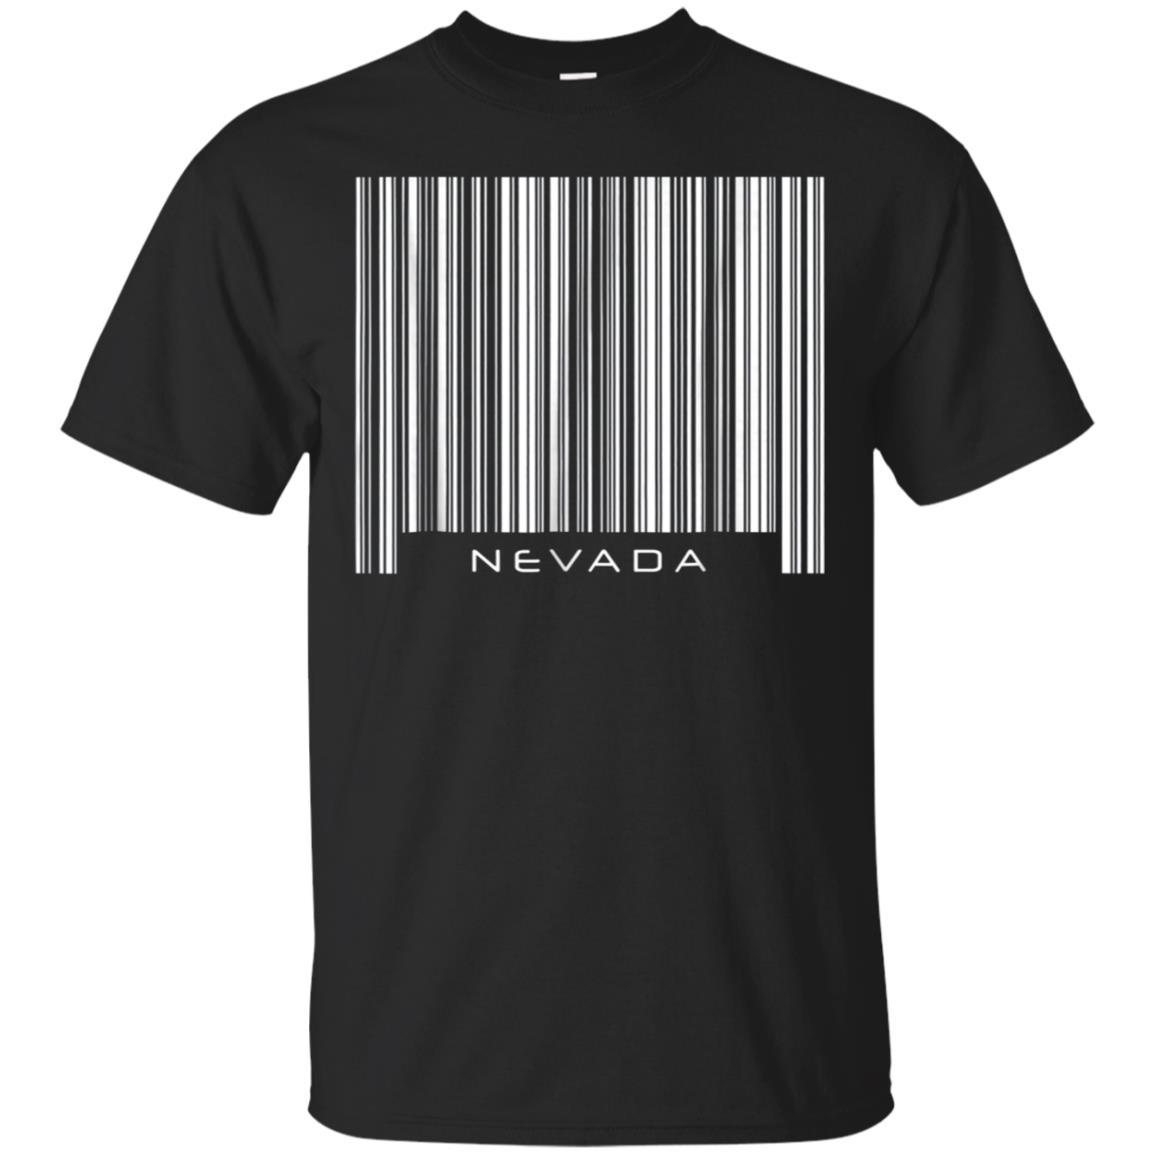 Cover Your Body With Amazing Barcode Nevada Illuminati Funny T-shirt